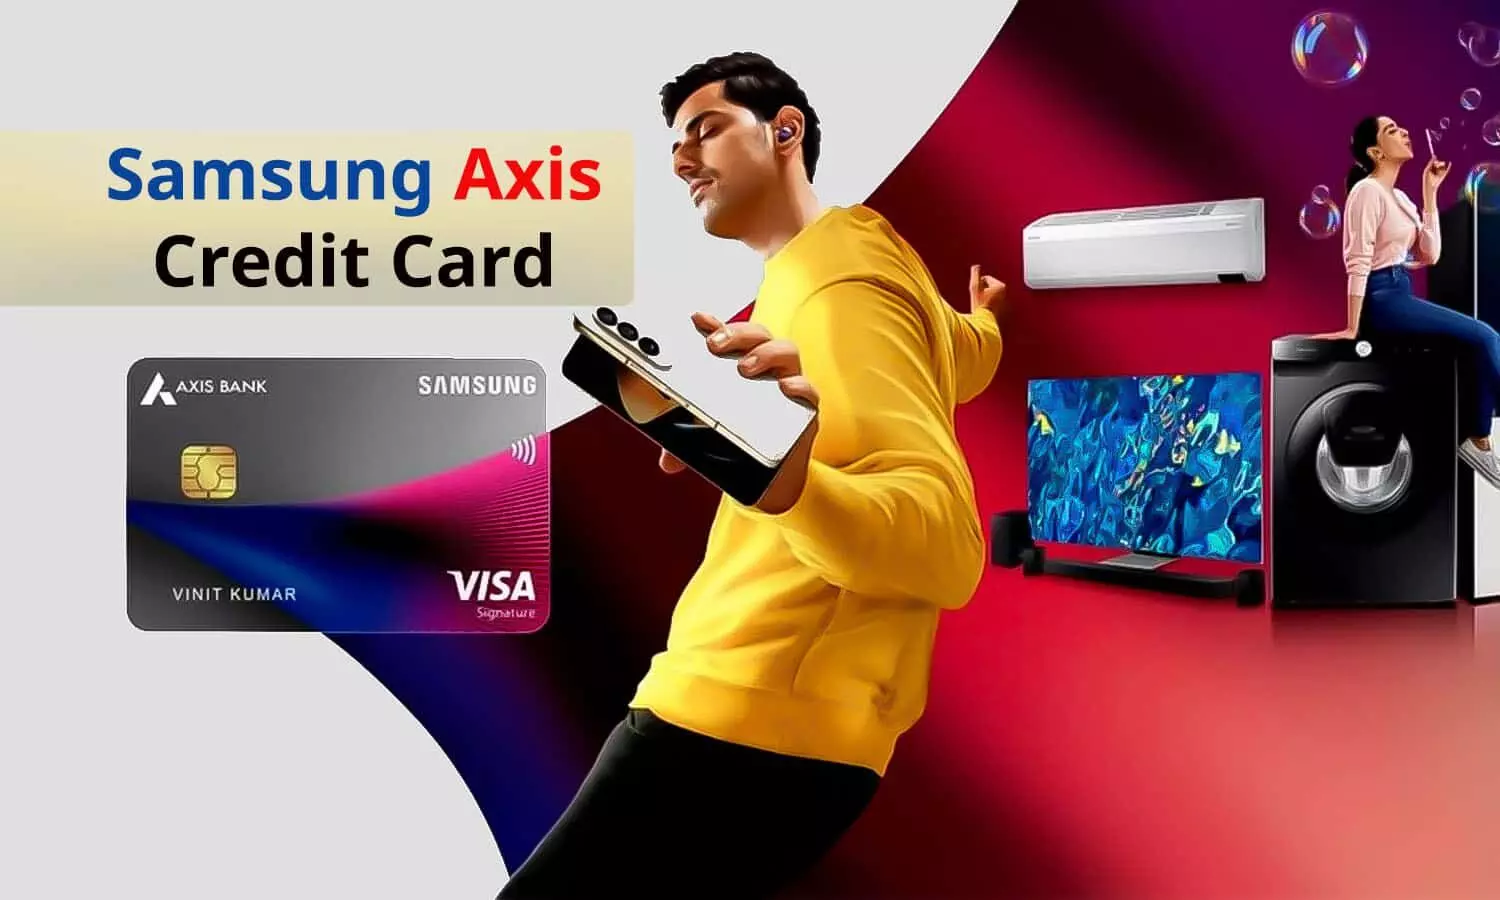 Samsung Axis Credit Card